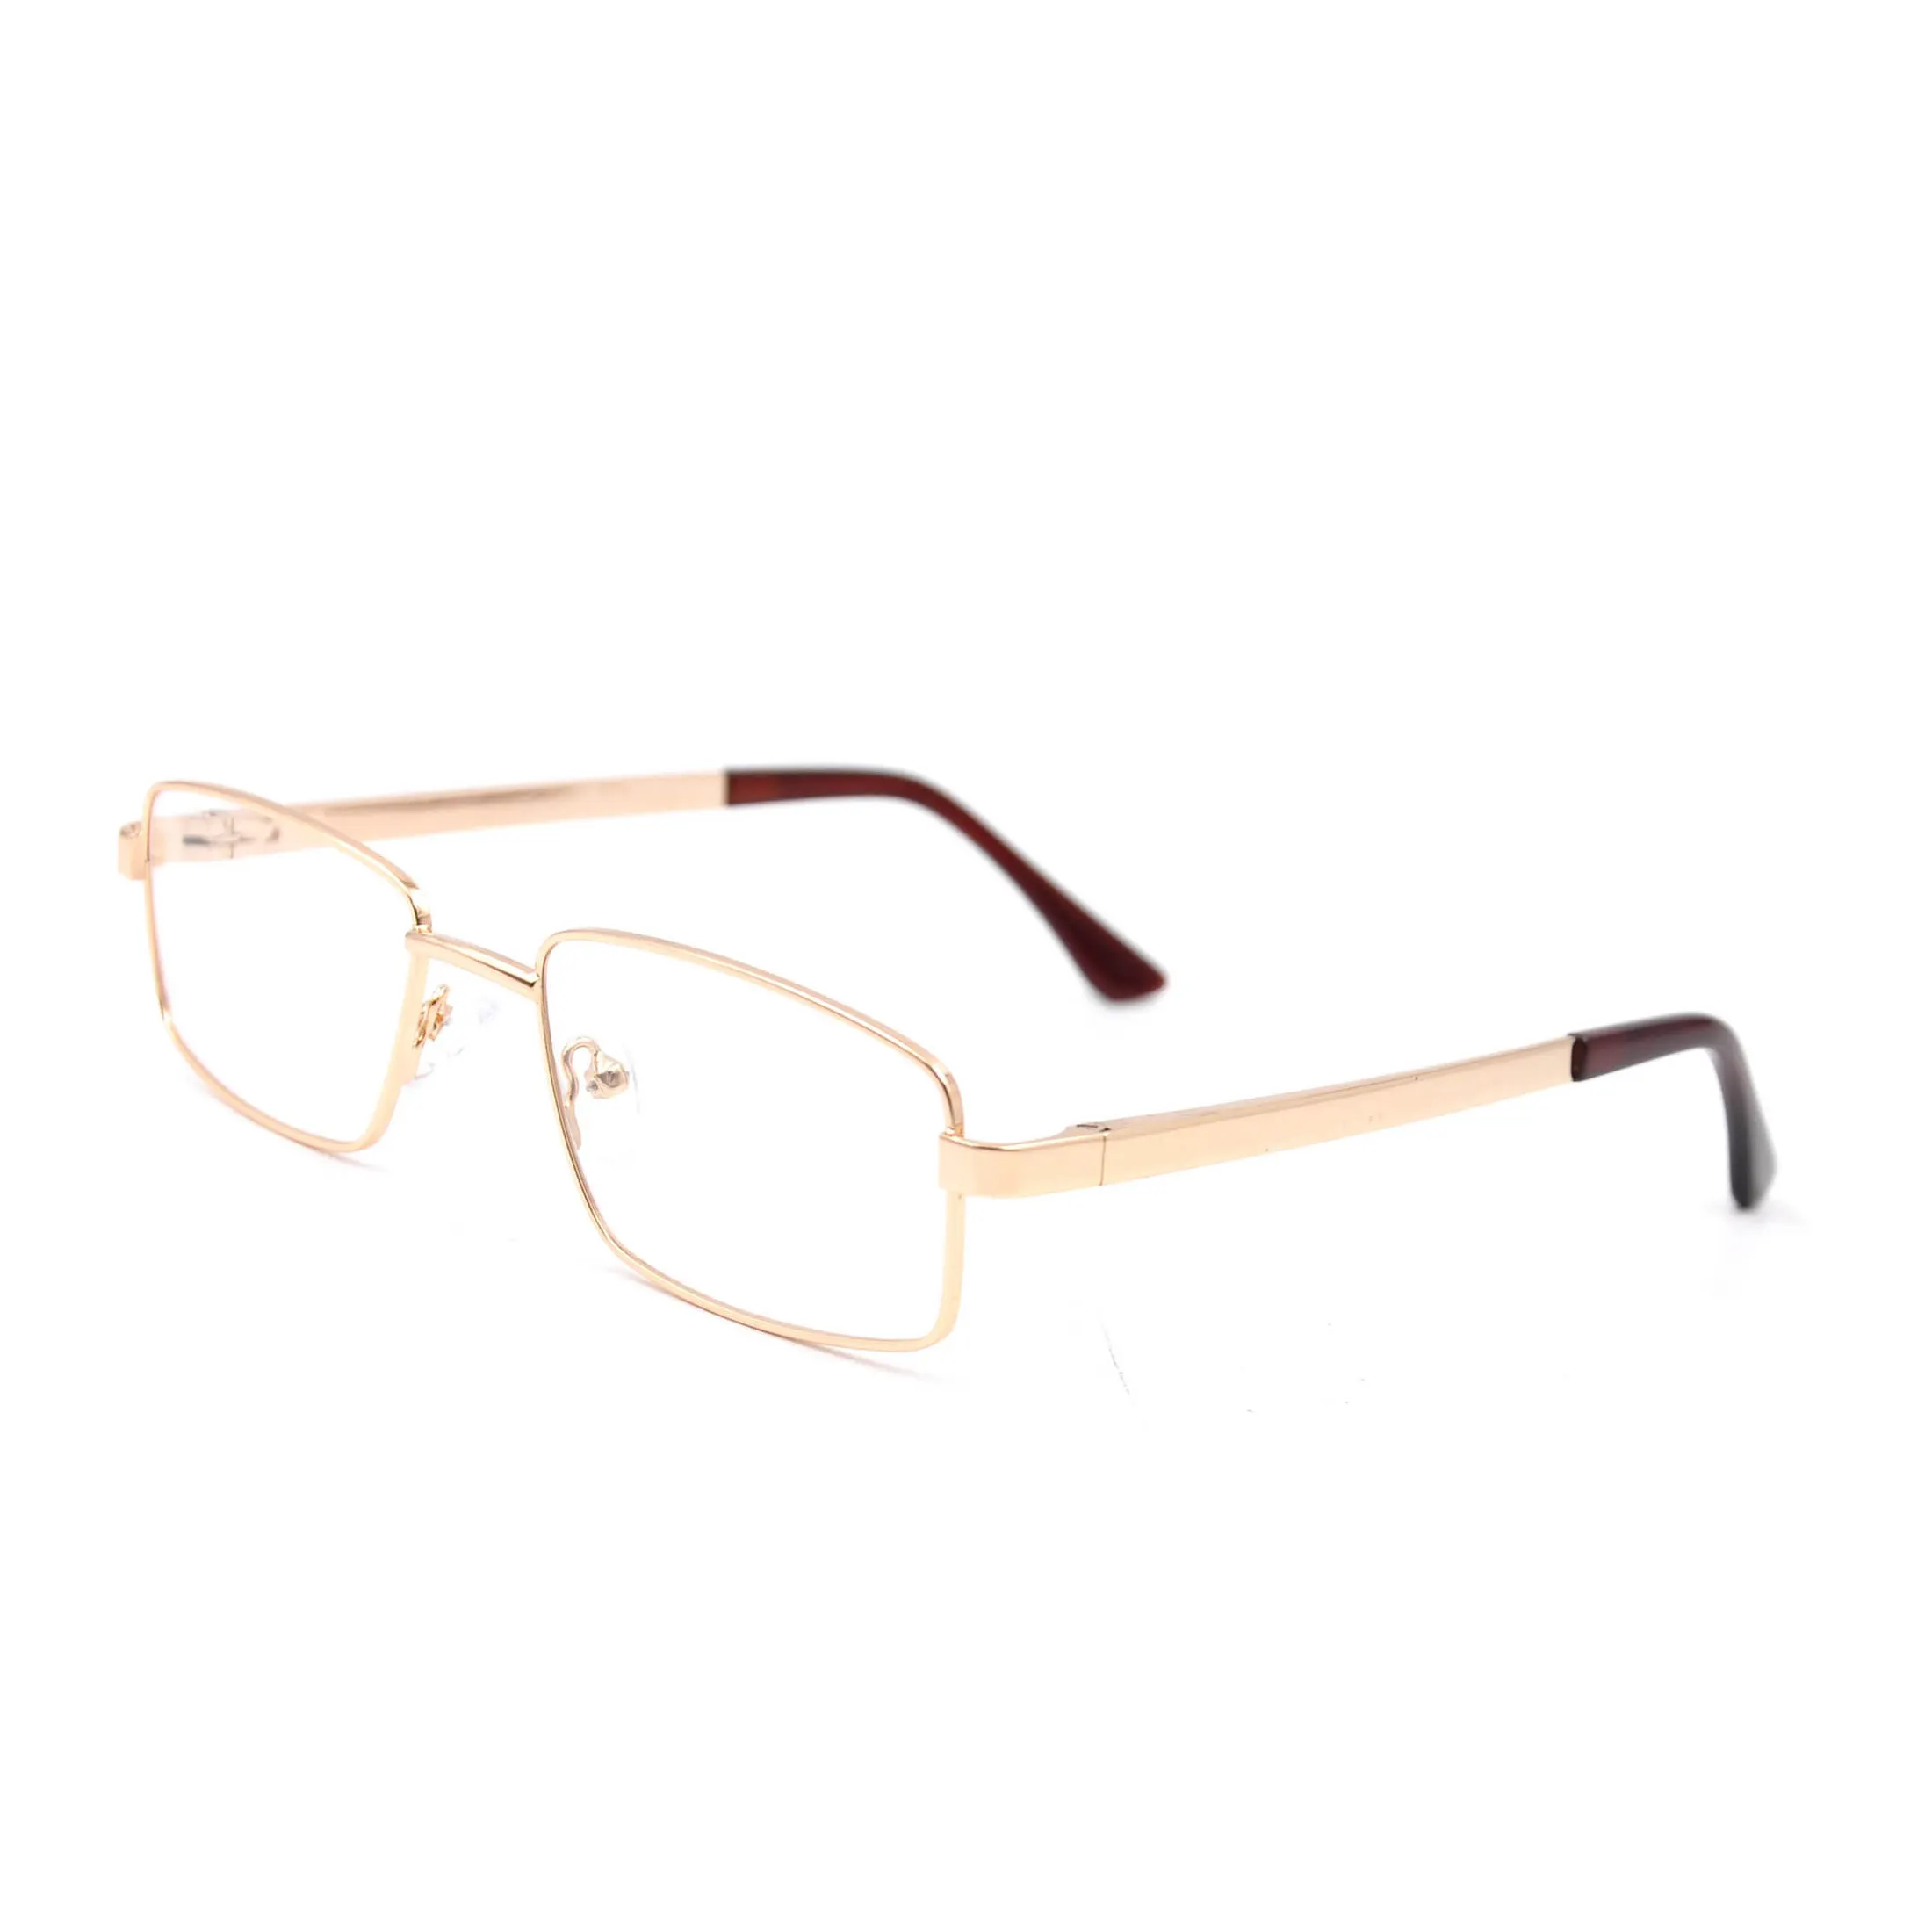 Gold Metal Optical Frames Cheap Glasses Discount Metal Eyeglasses Promotion Eyewear